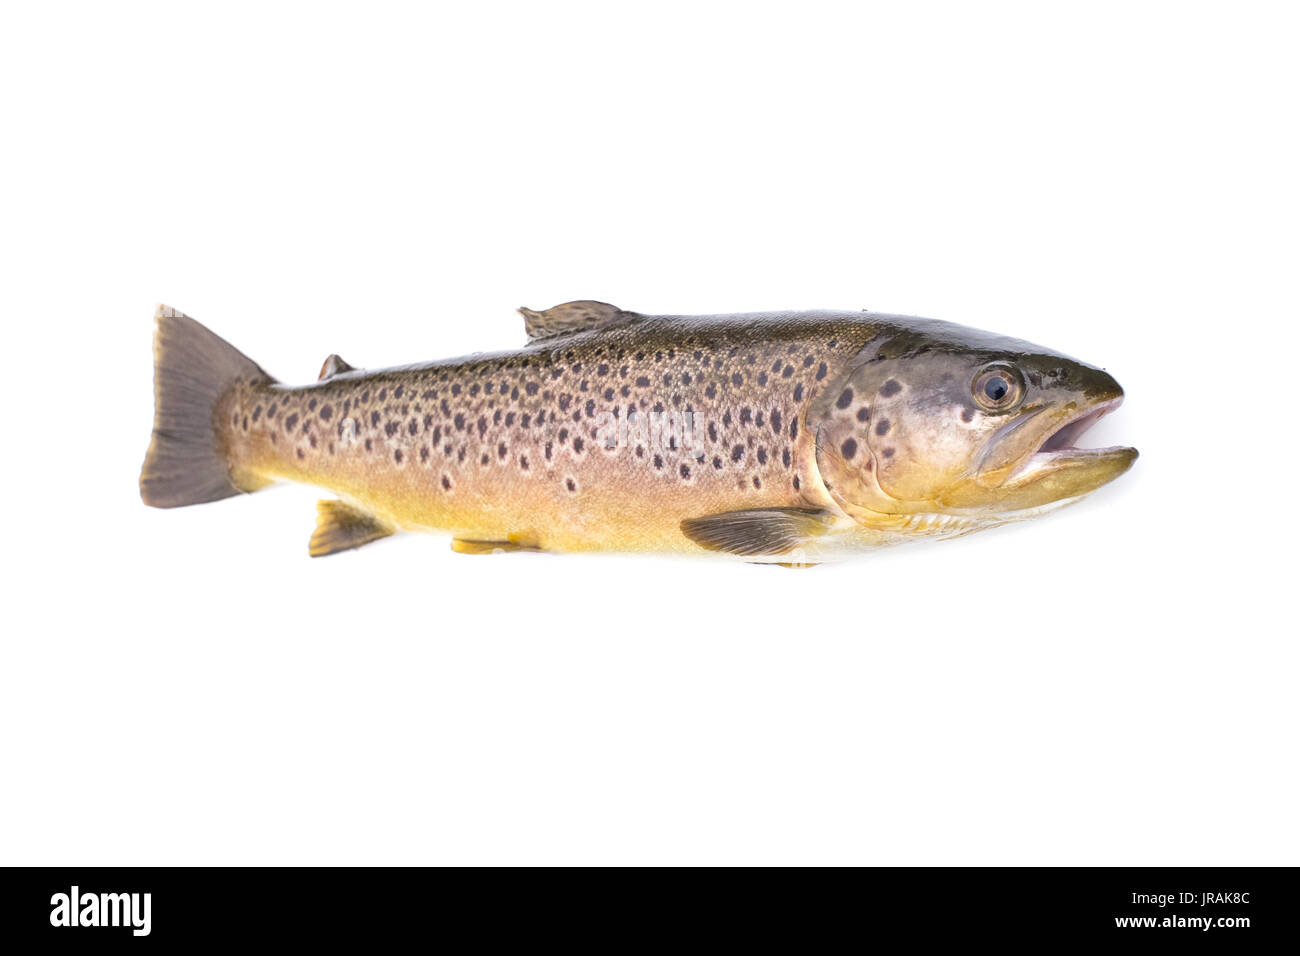 Brown trout fish Salmo trutta isolated on a white studio background. Stock Photo